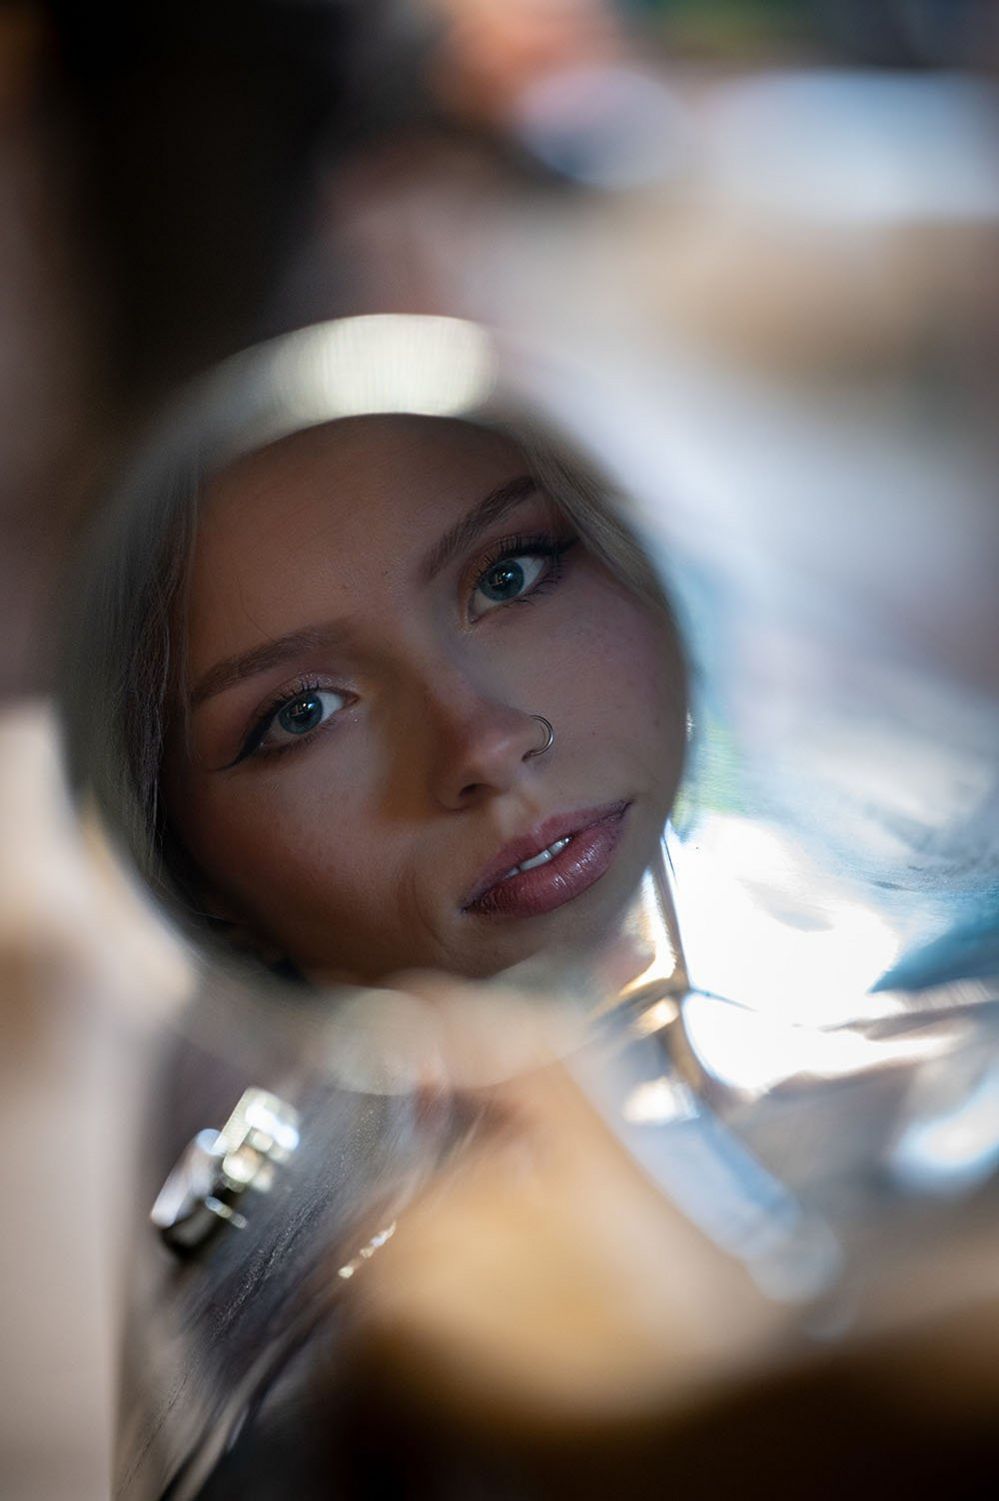 A woman's face in a car mirror